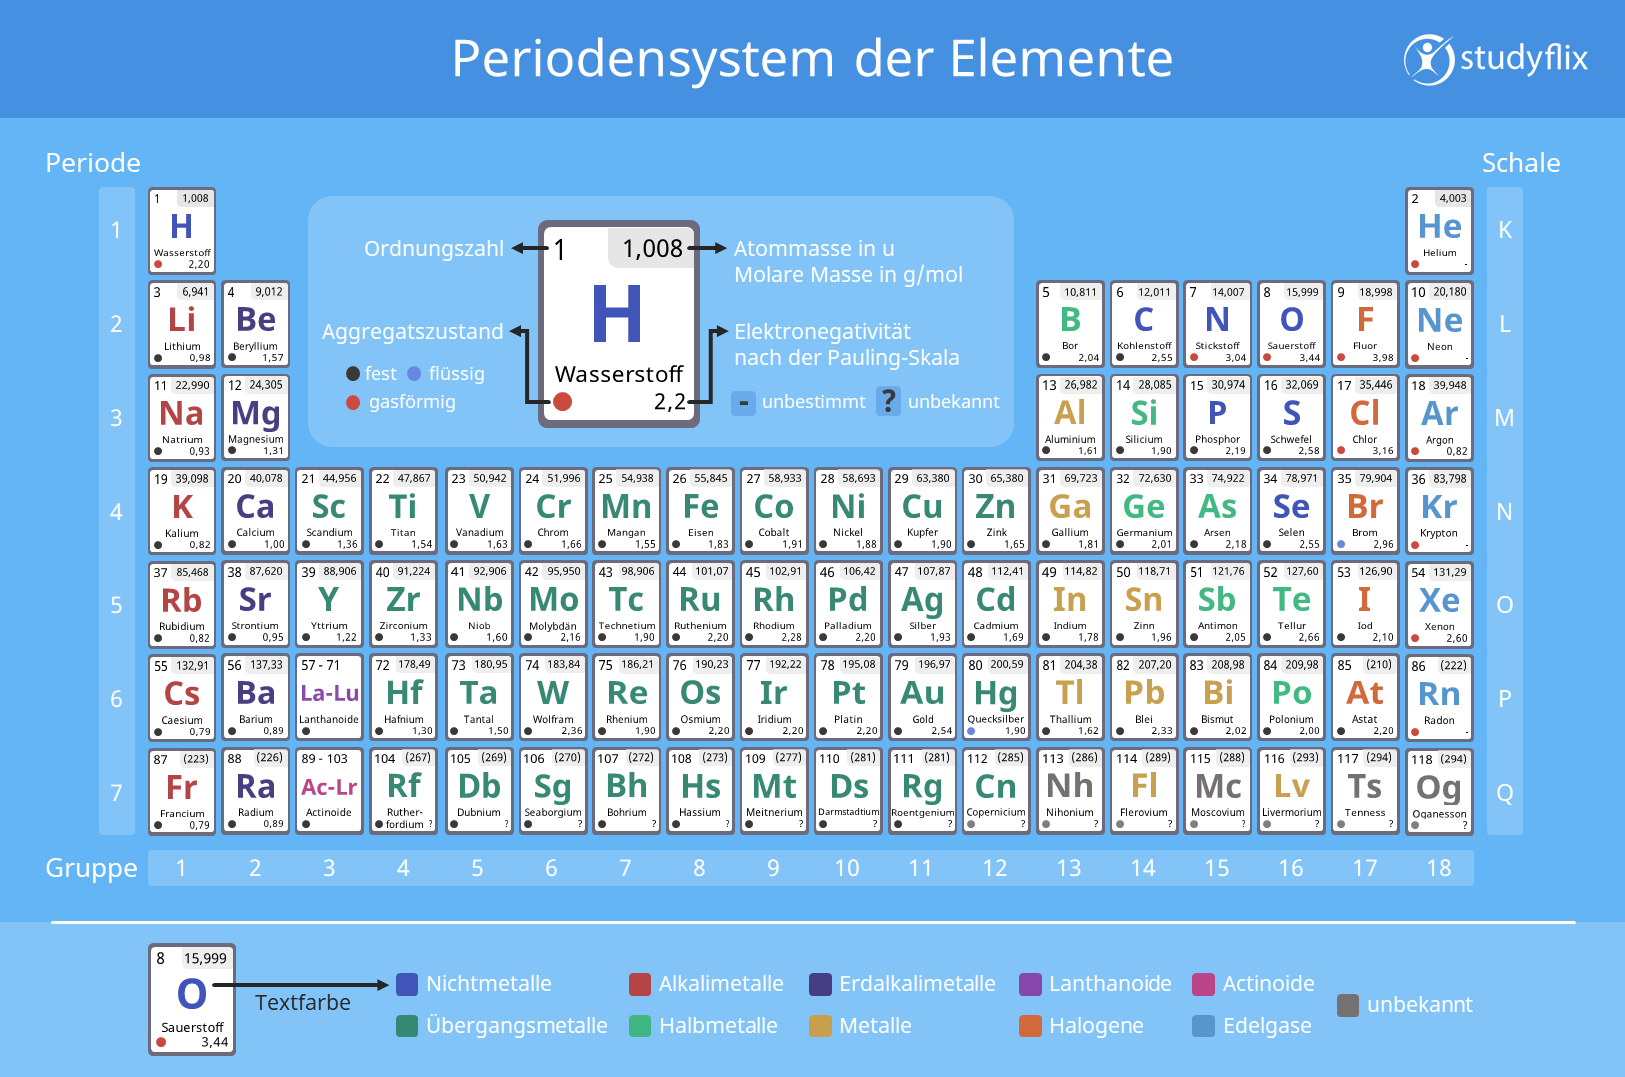 Periodensystem, Periodensystem herunterladen, Periodensystem der Elemente, Periodensystem download, PSE 